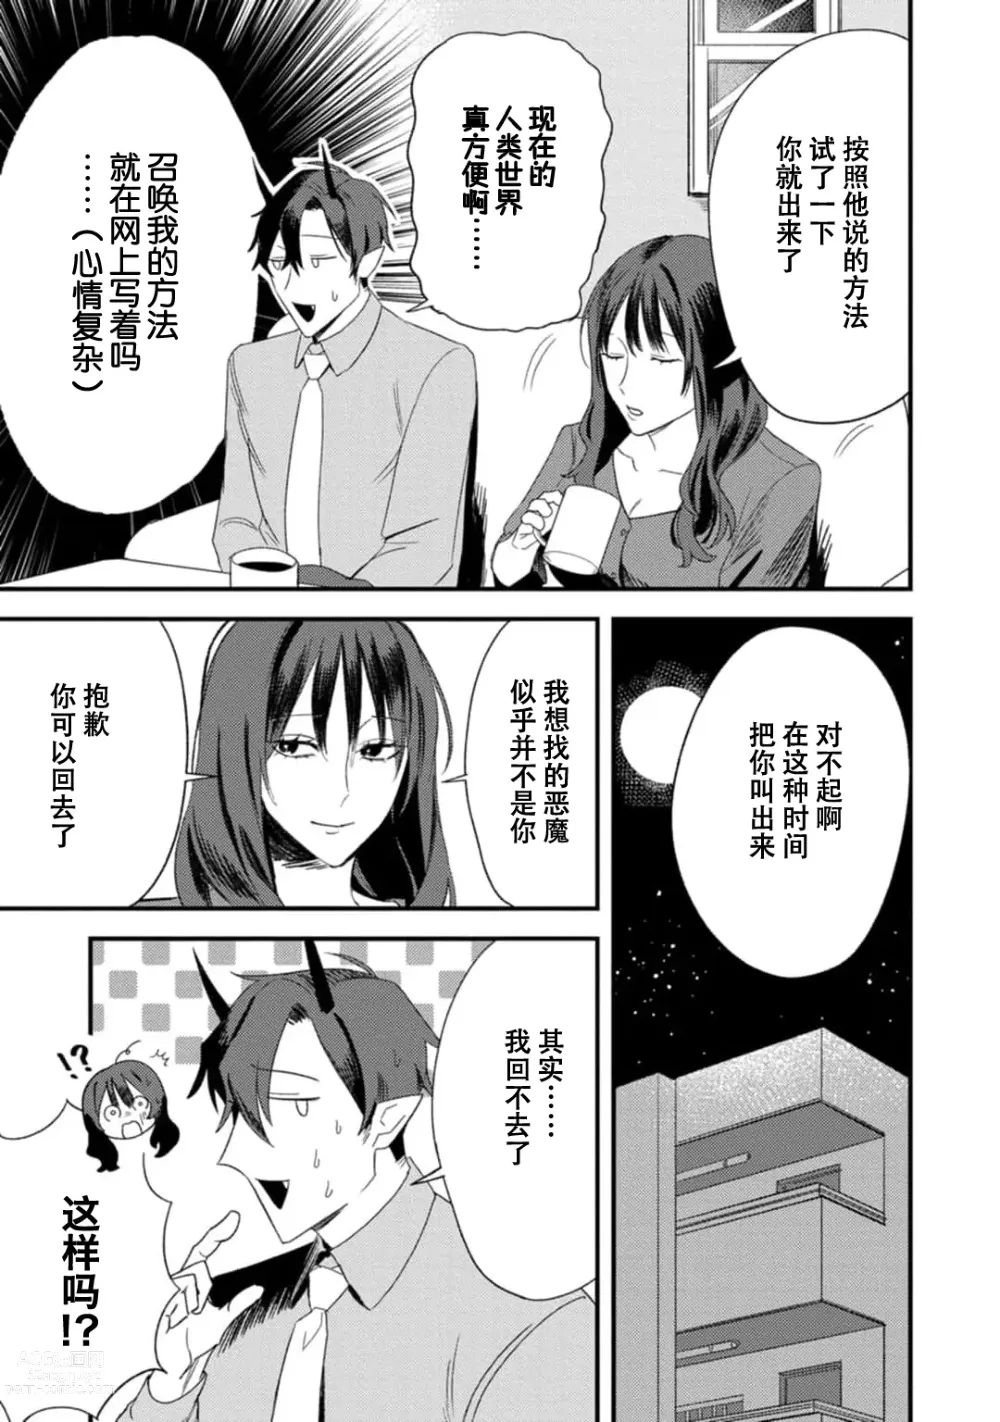 Page 11 of manga 甜美的回报，不过是与恶魔契约的一环。 1-2